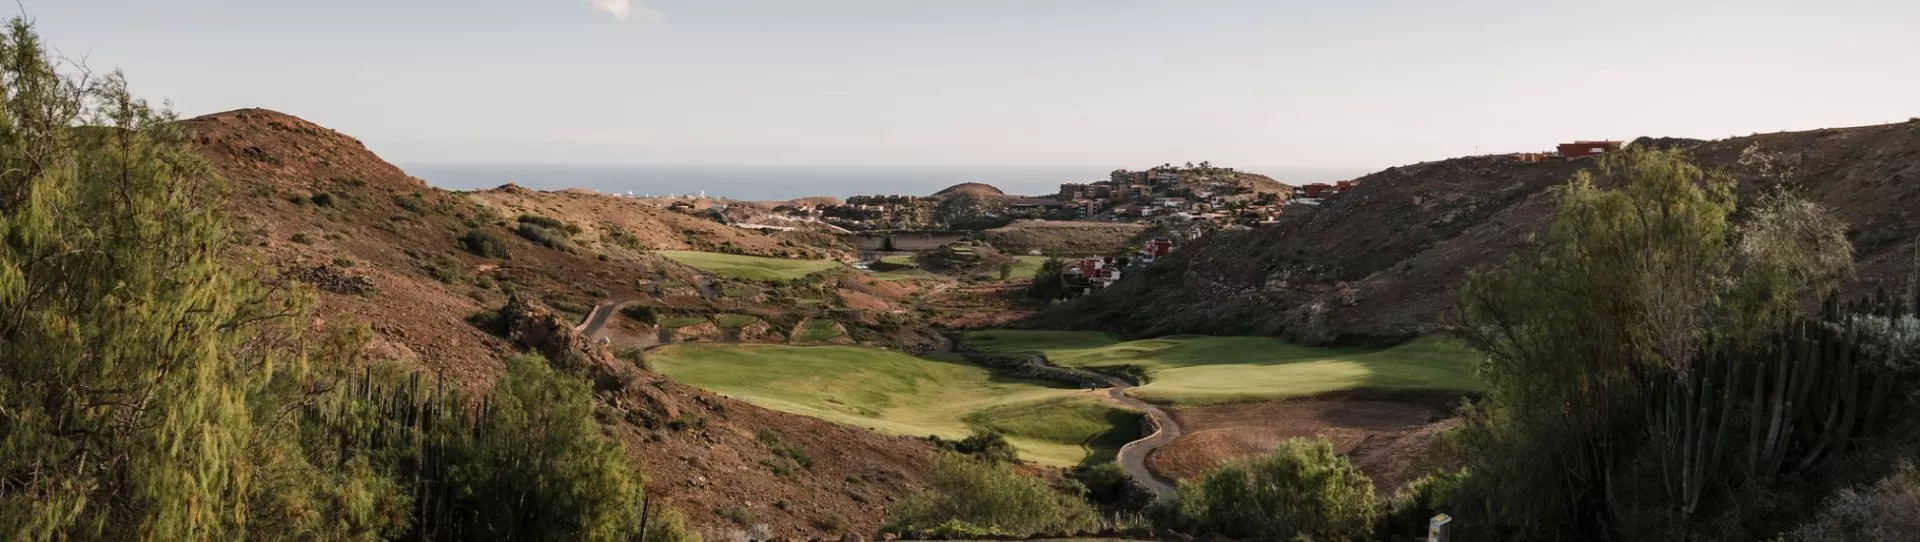 Spain golf courses - Salobre Golf New Course - Photo 2